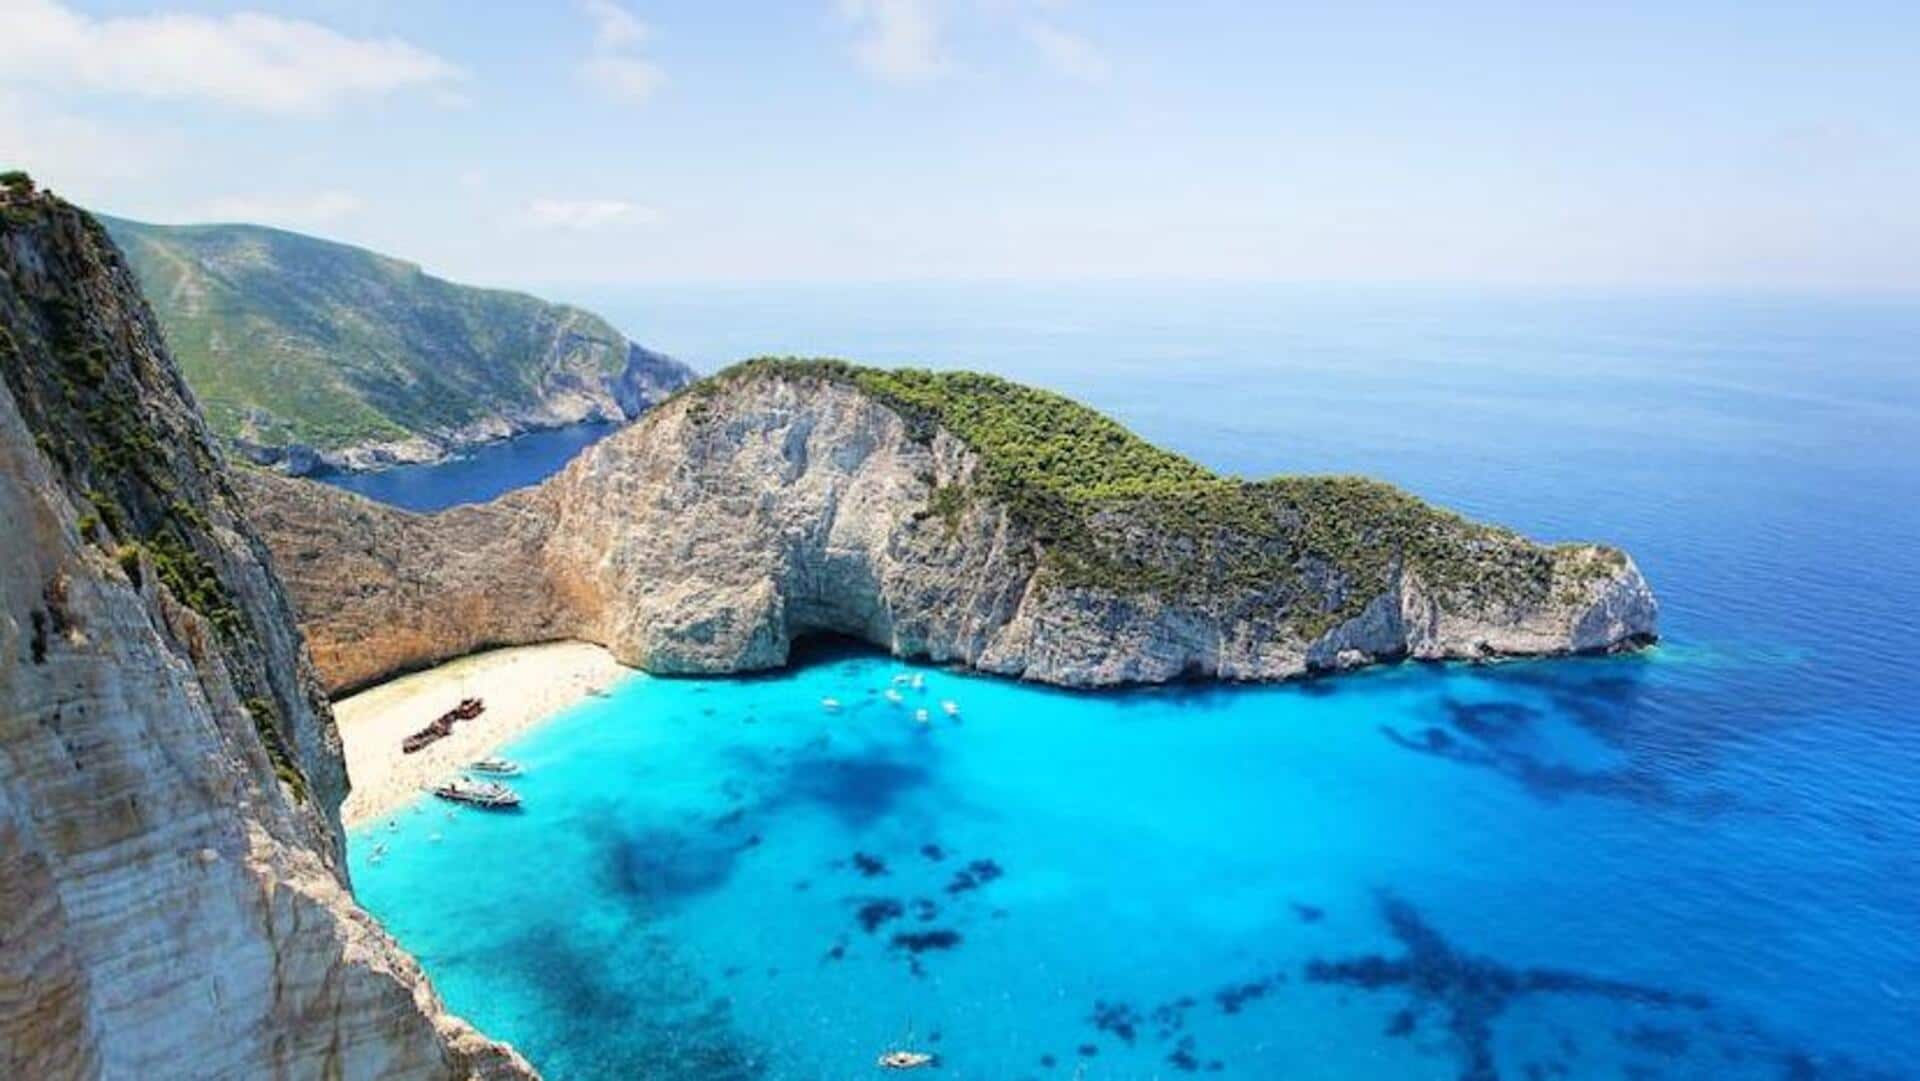 Make your way to Greece's enchanting Aegean Sea beaches